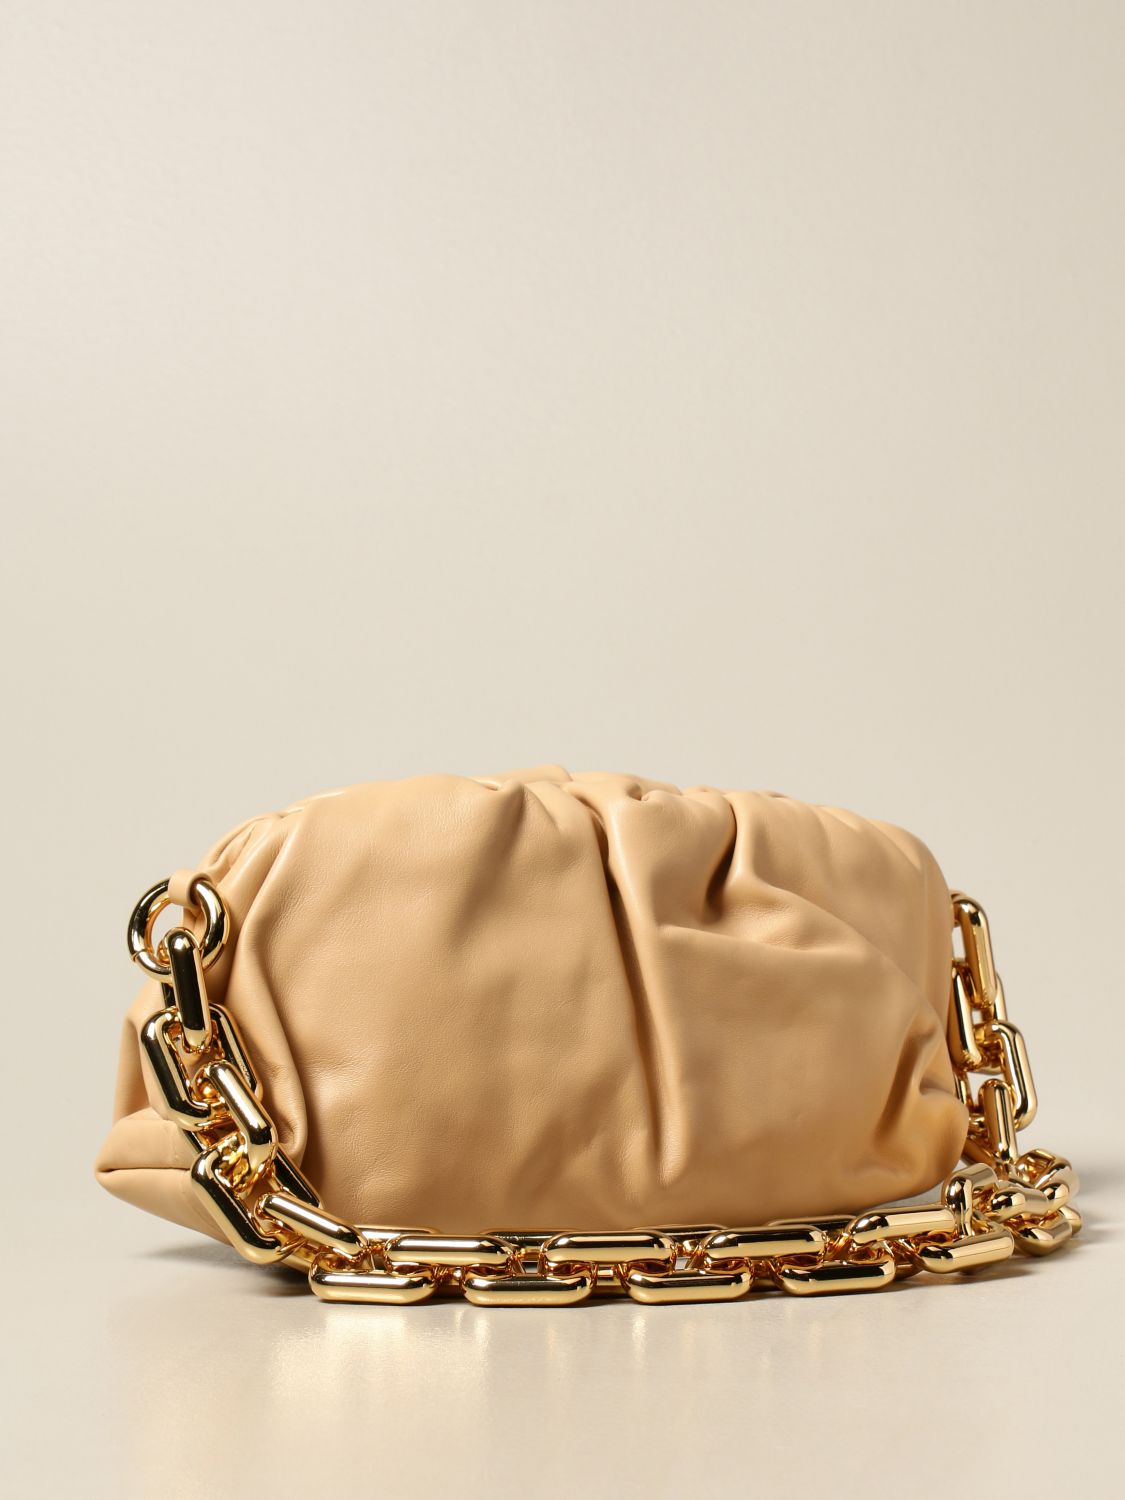 BOTTEGA VENETA: The chain pouch bag in nappa leather | Shoulder Bag ...